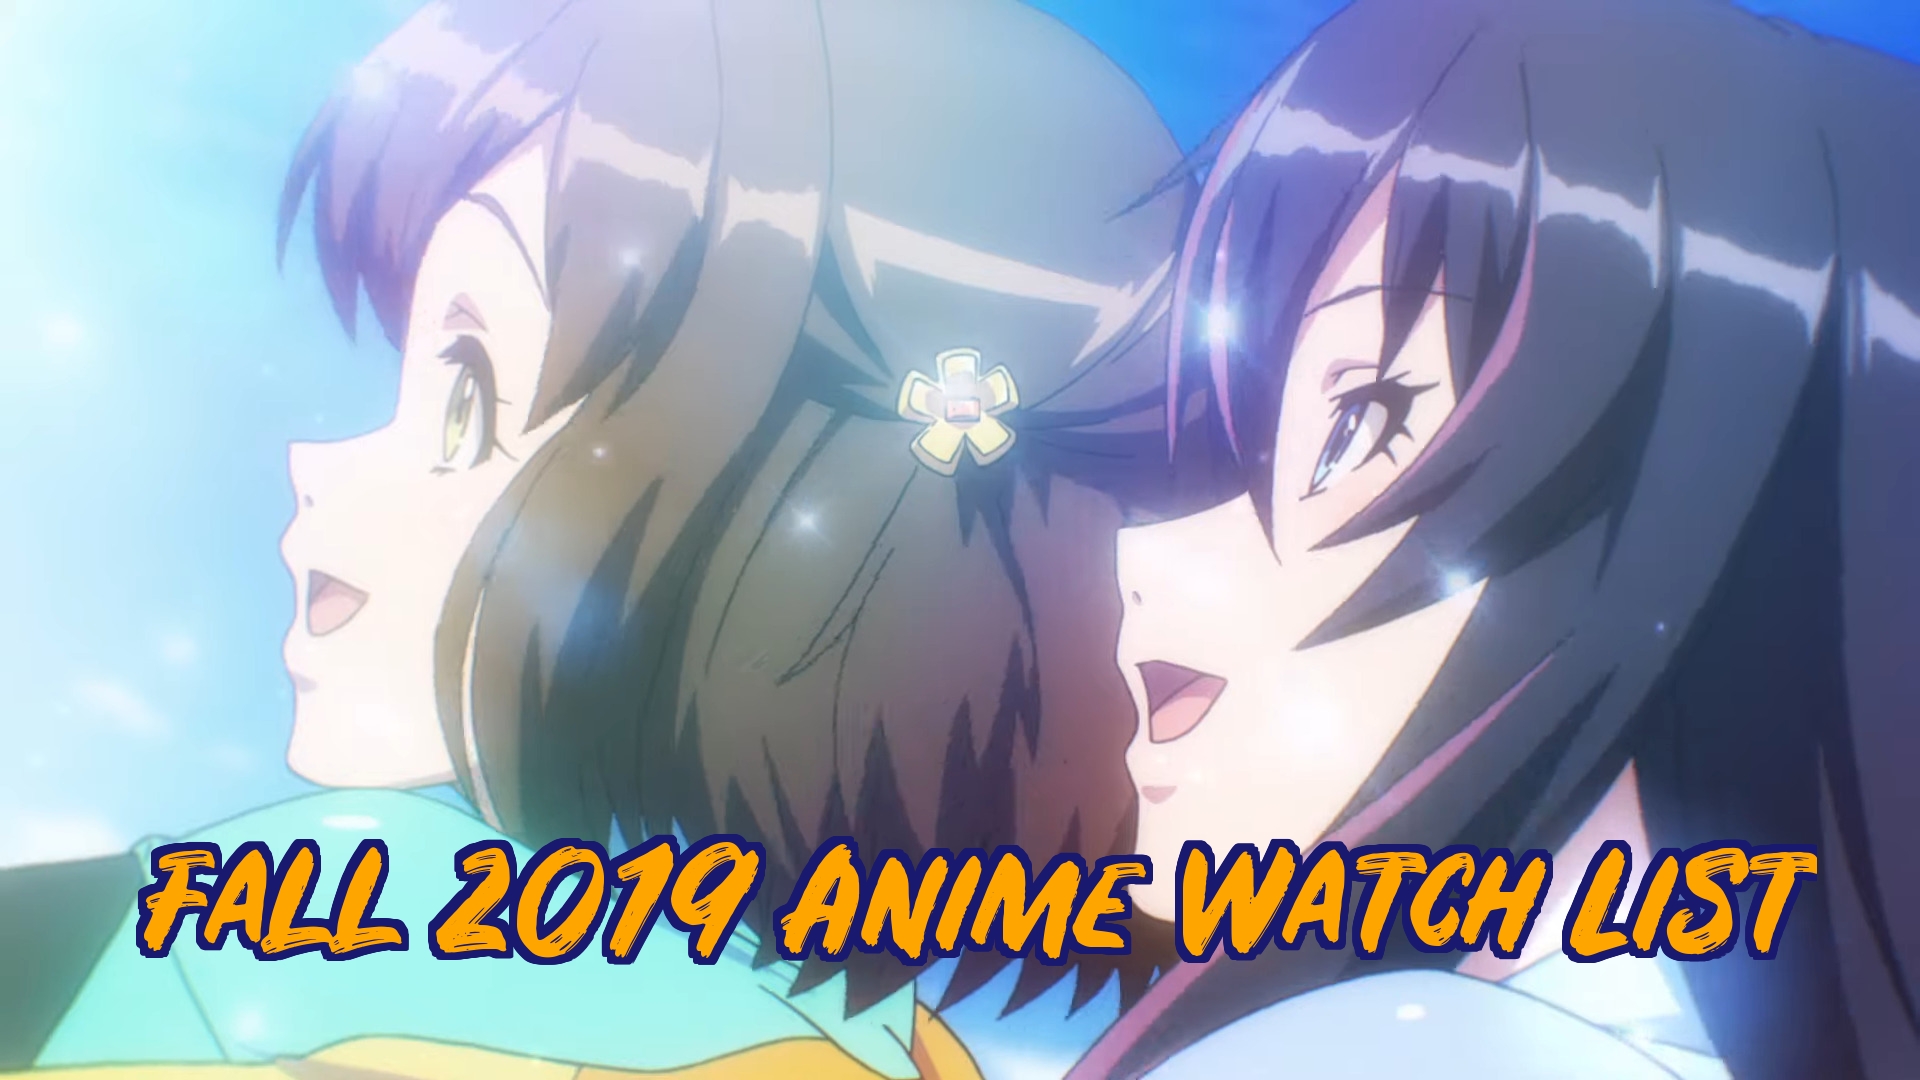 watch list – Anime QandA